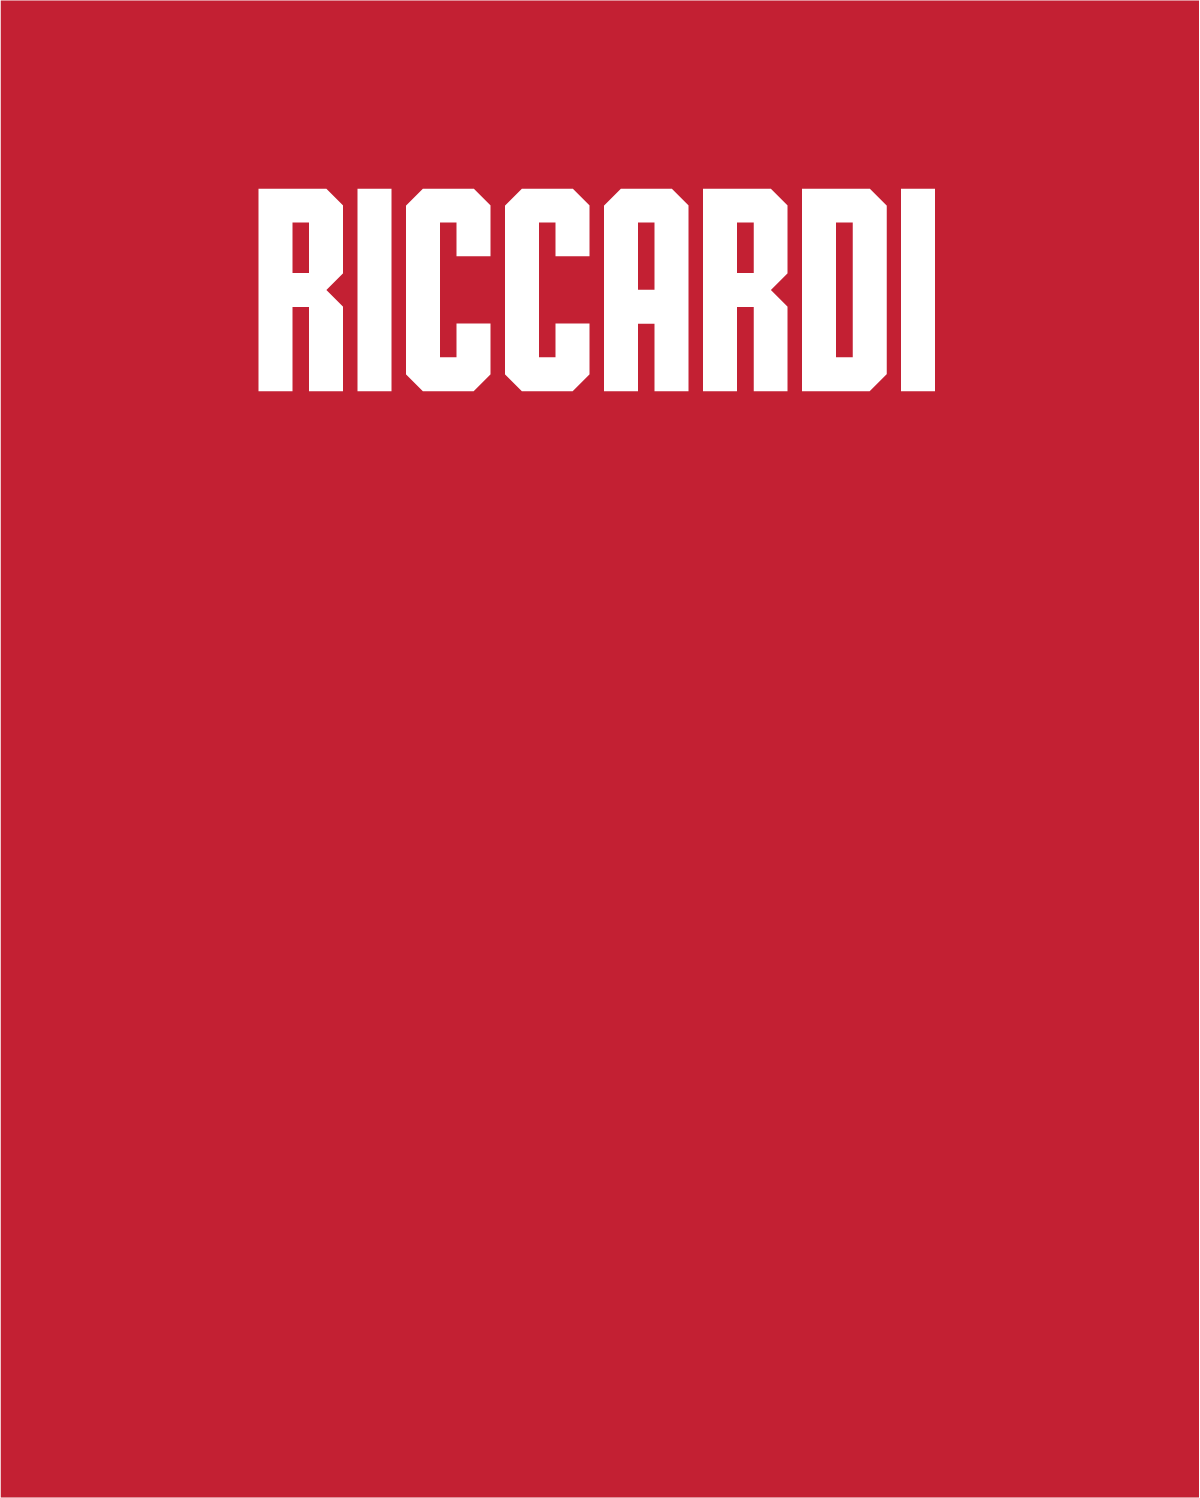 Nicole Riccardi